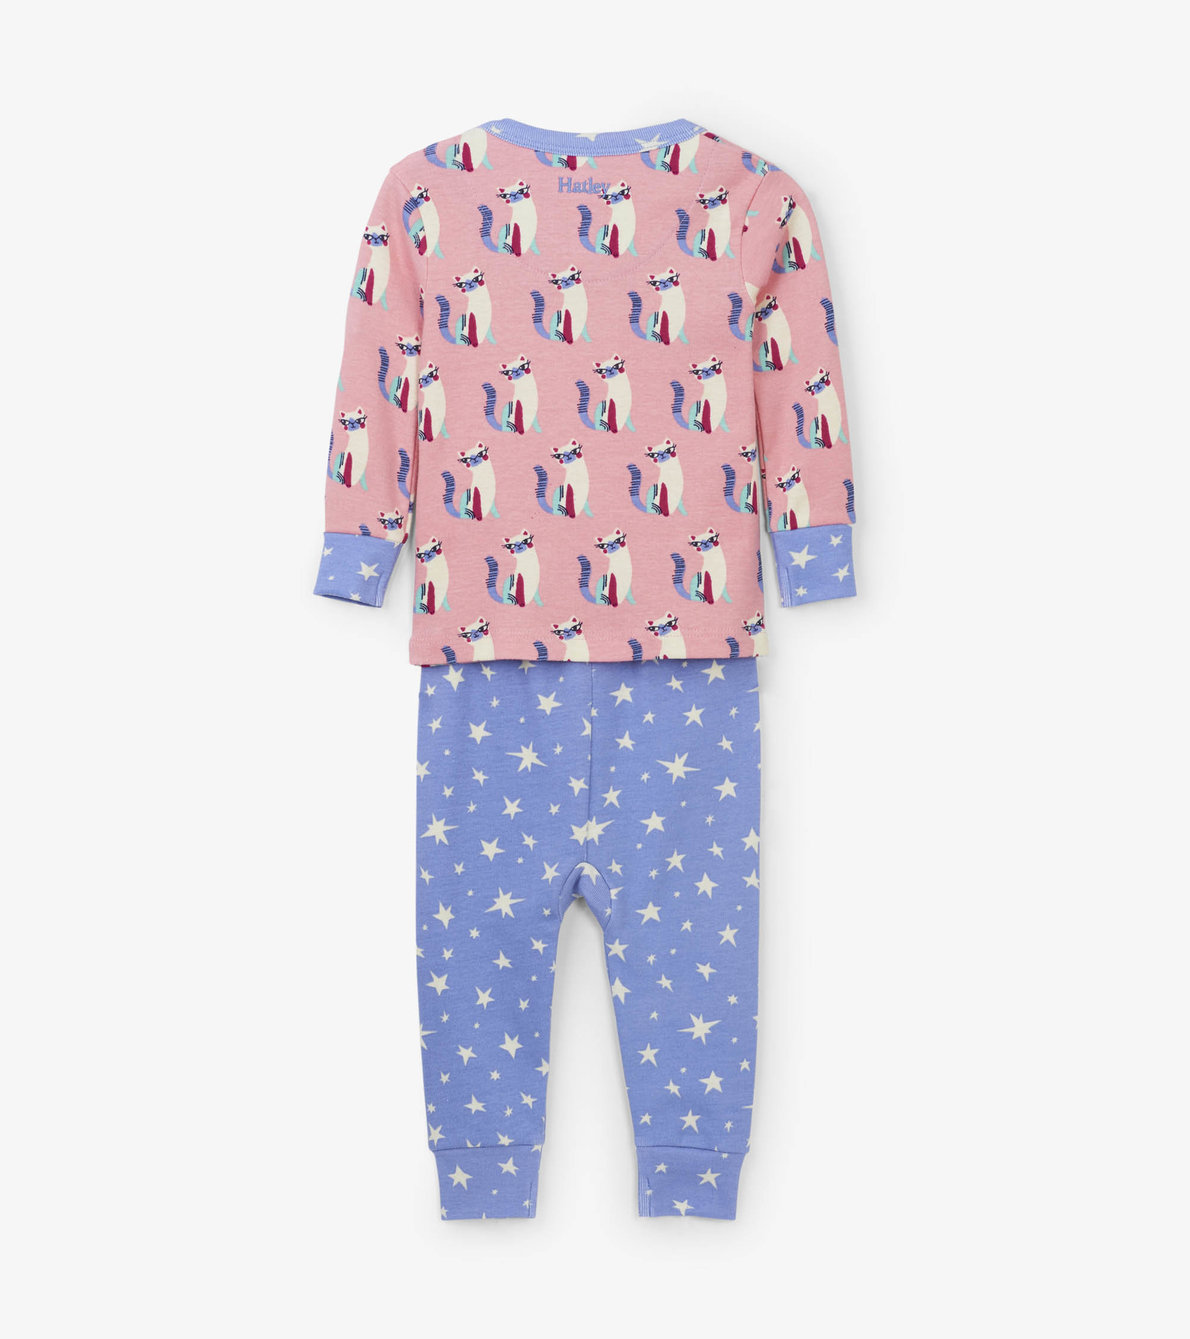 View larger image of Patchwork Kitty Organic Cotton Baby Pajama Set